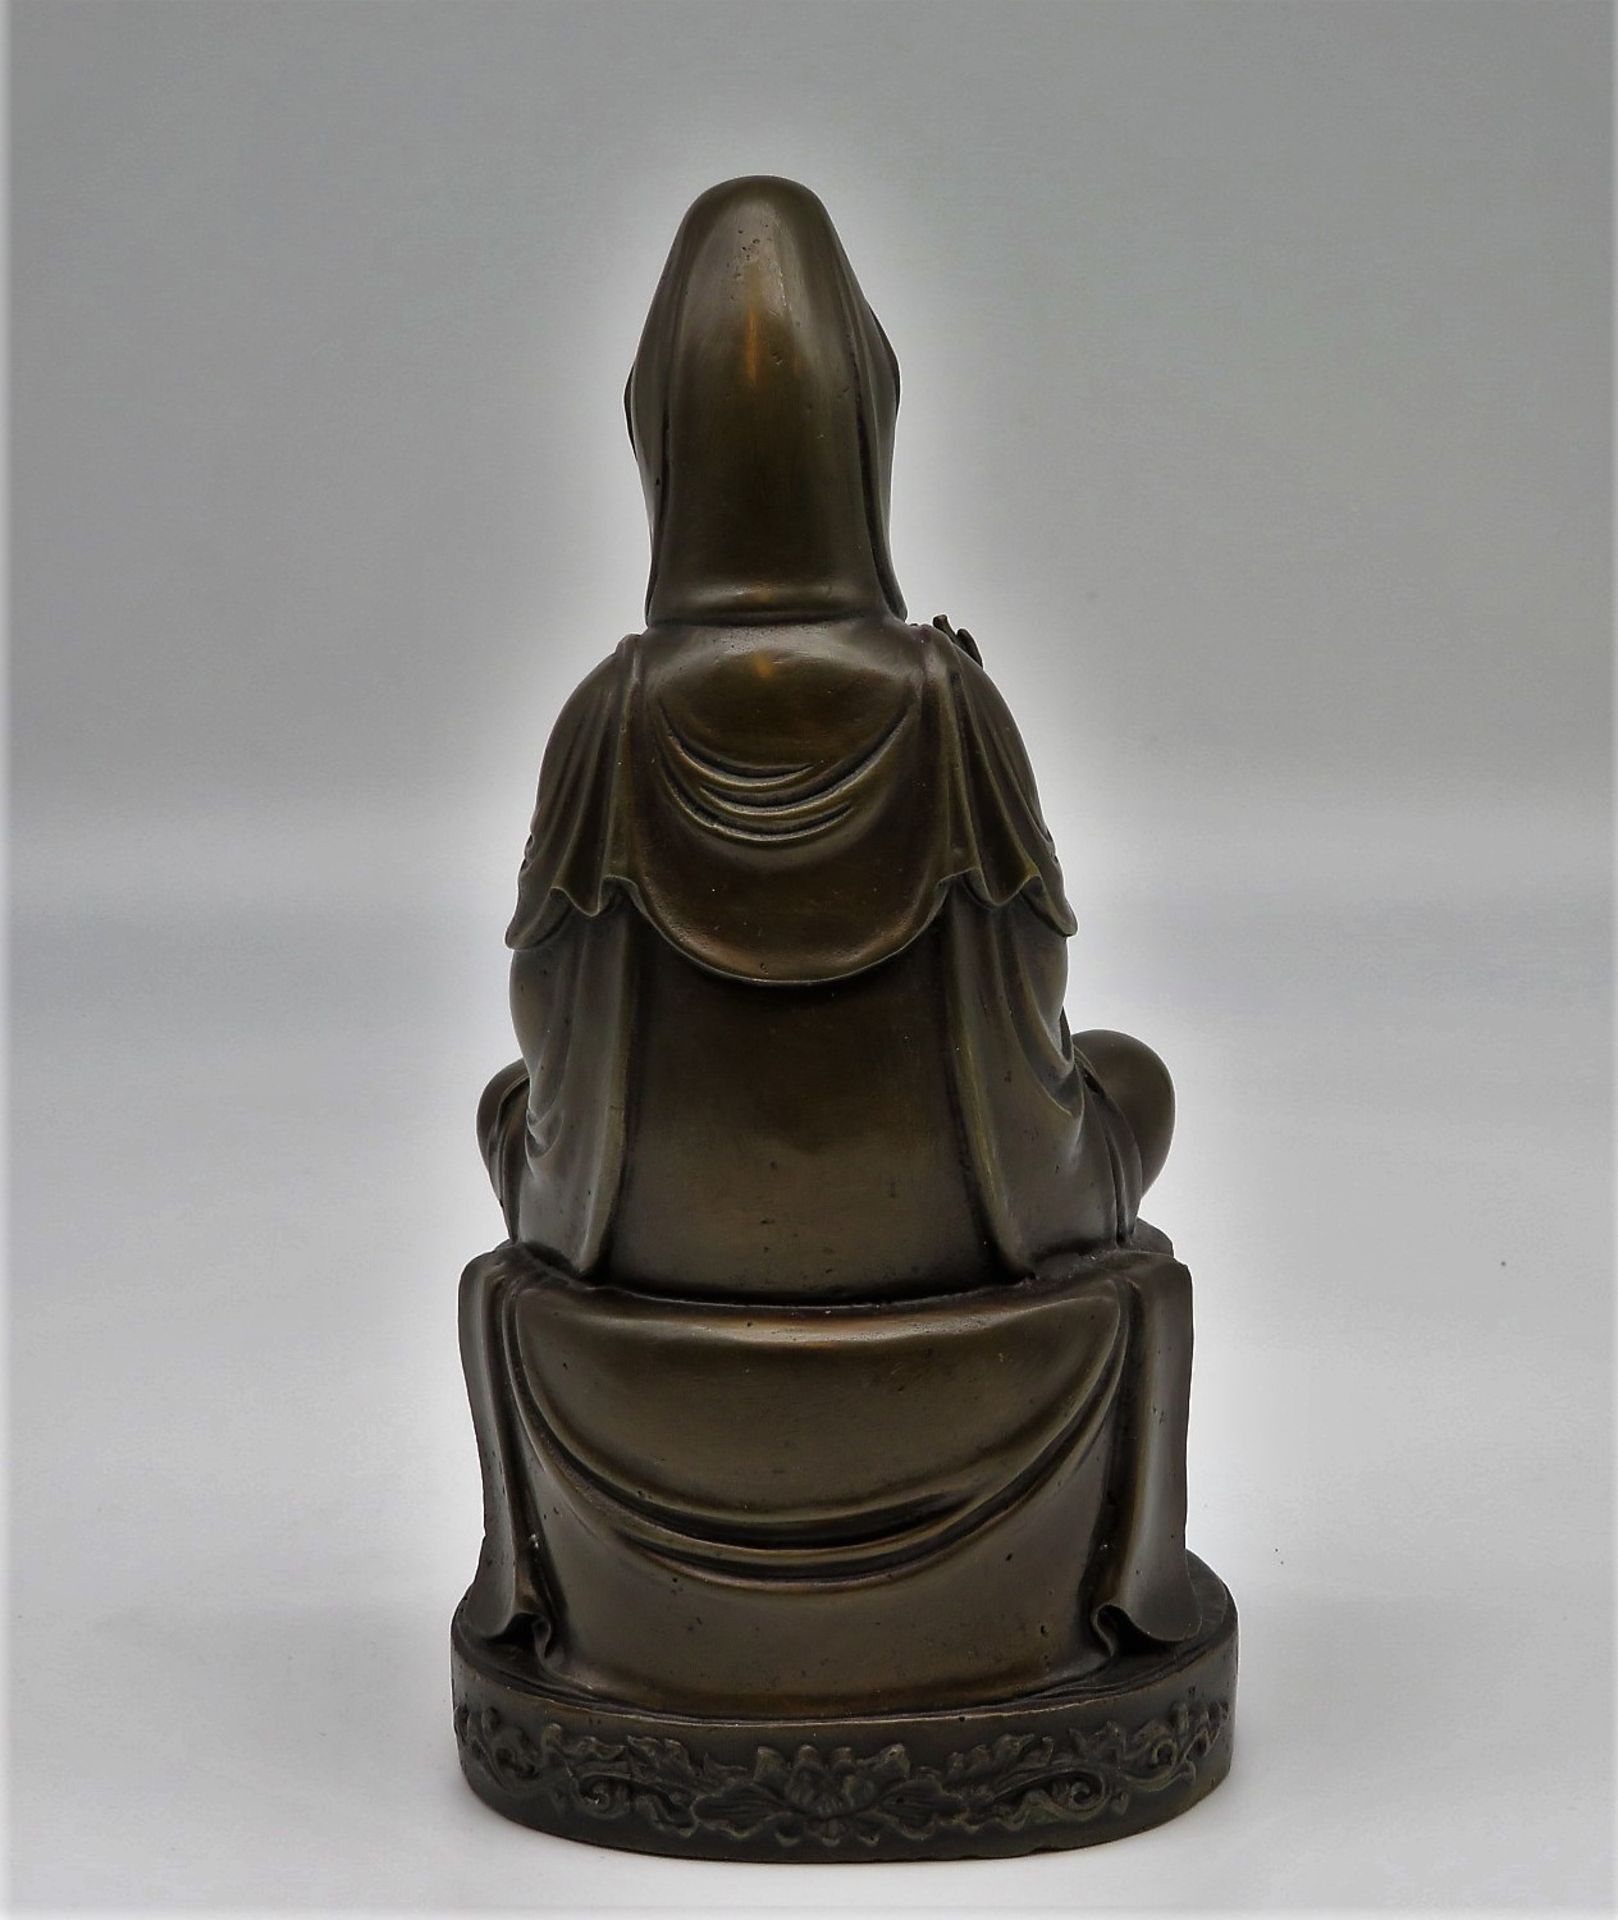 Sitzende Guanyin auf Lotusthron, China, Bronze, sign., 1. Hälfte 20. Jahrhundert, h 19 cm, d 10 cm. - Image 2 of 2